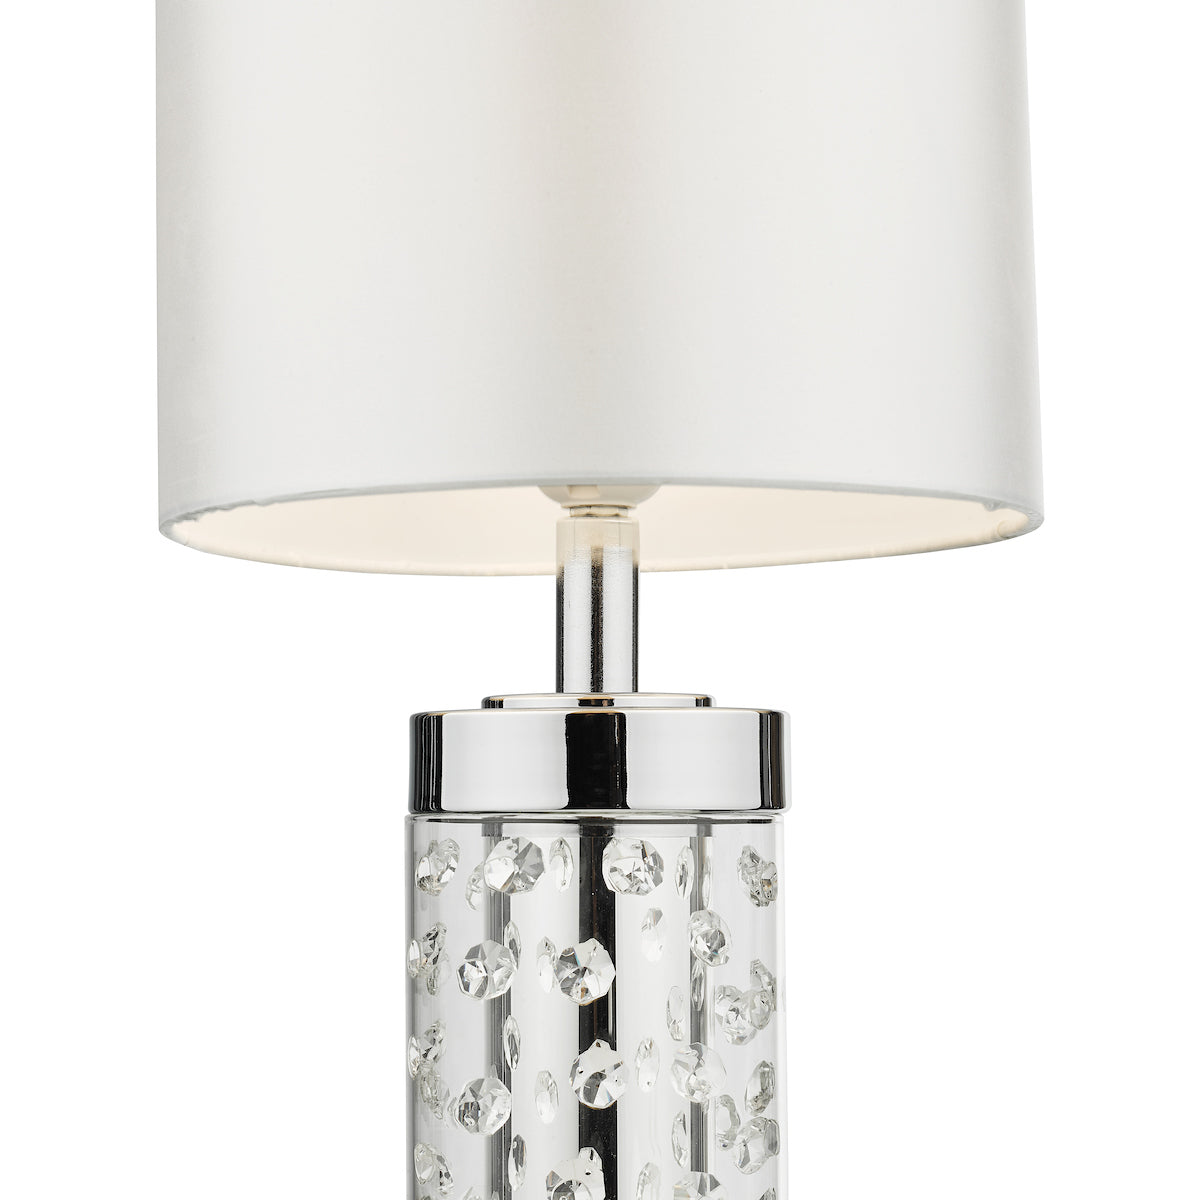 Rosana Small Polished Chrome & Crystal Table Lamp